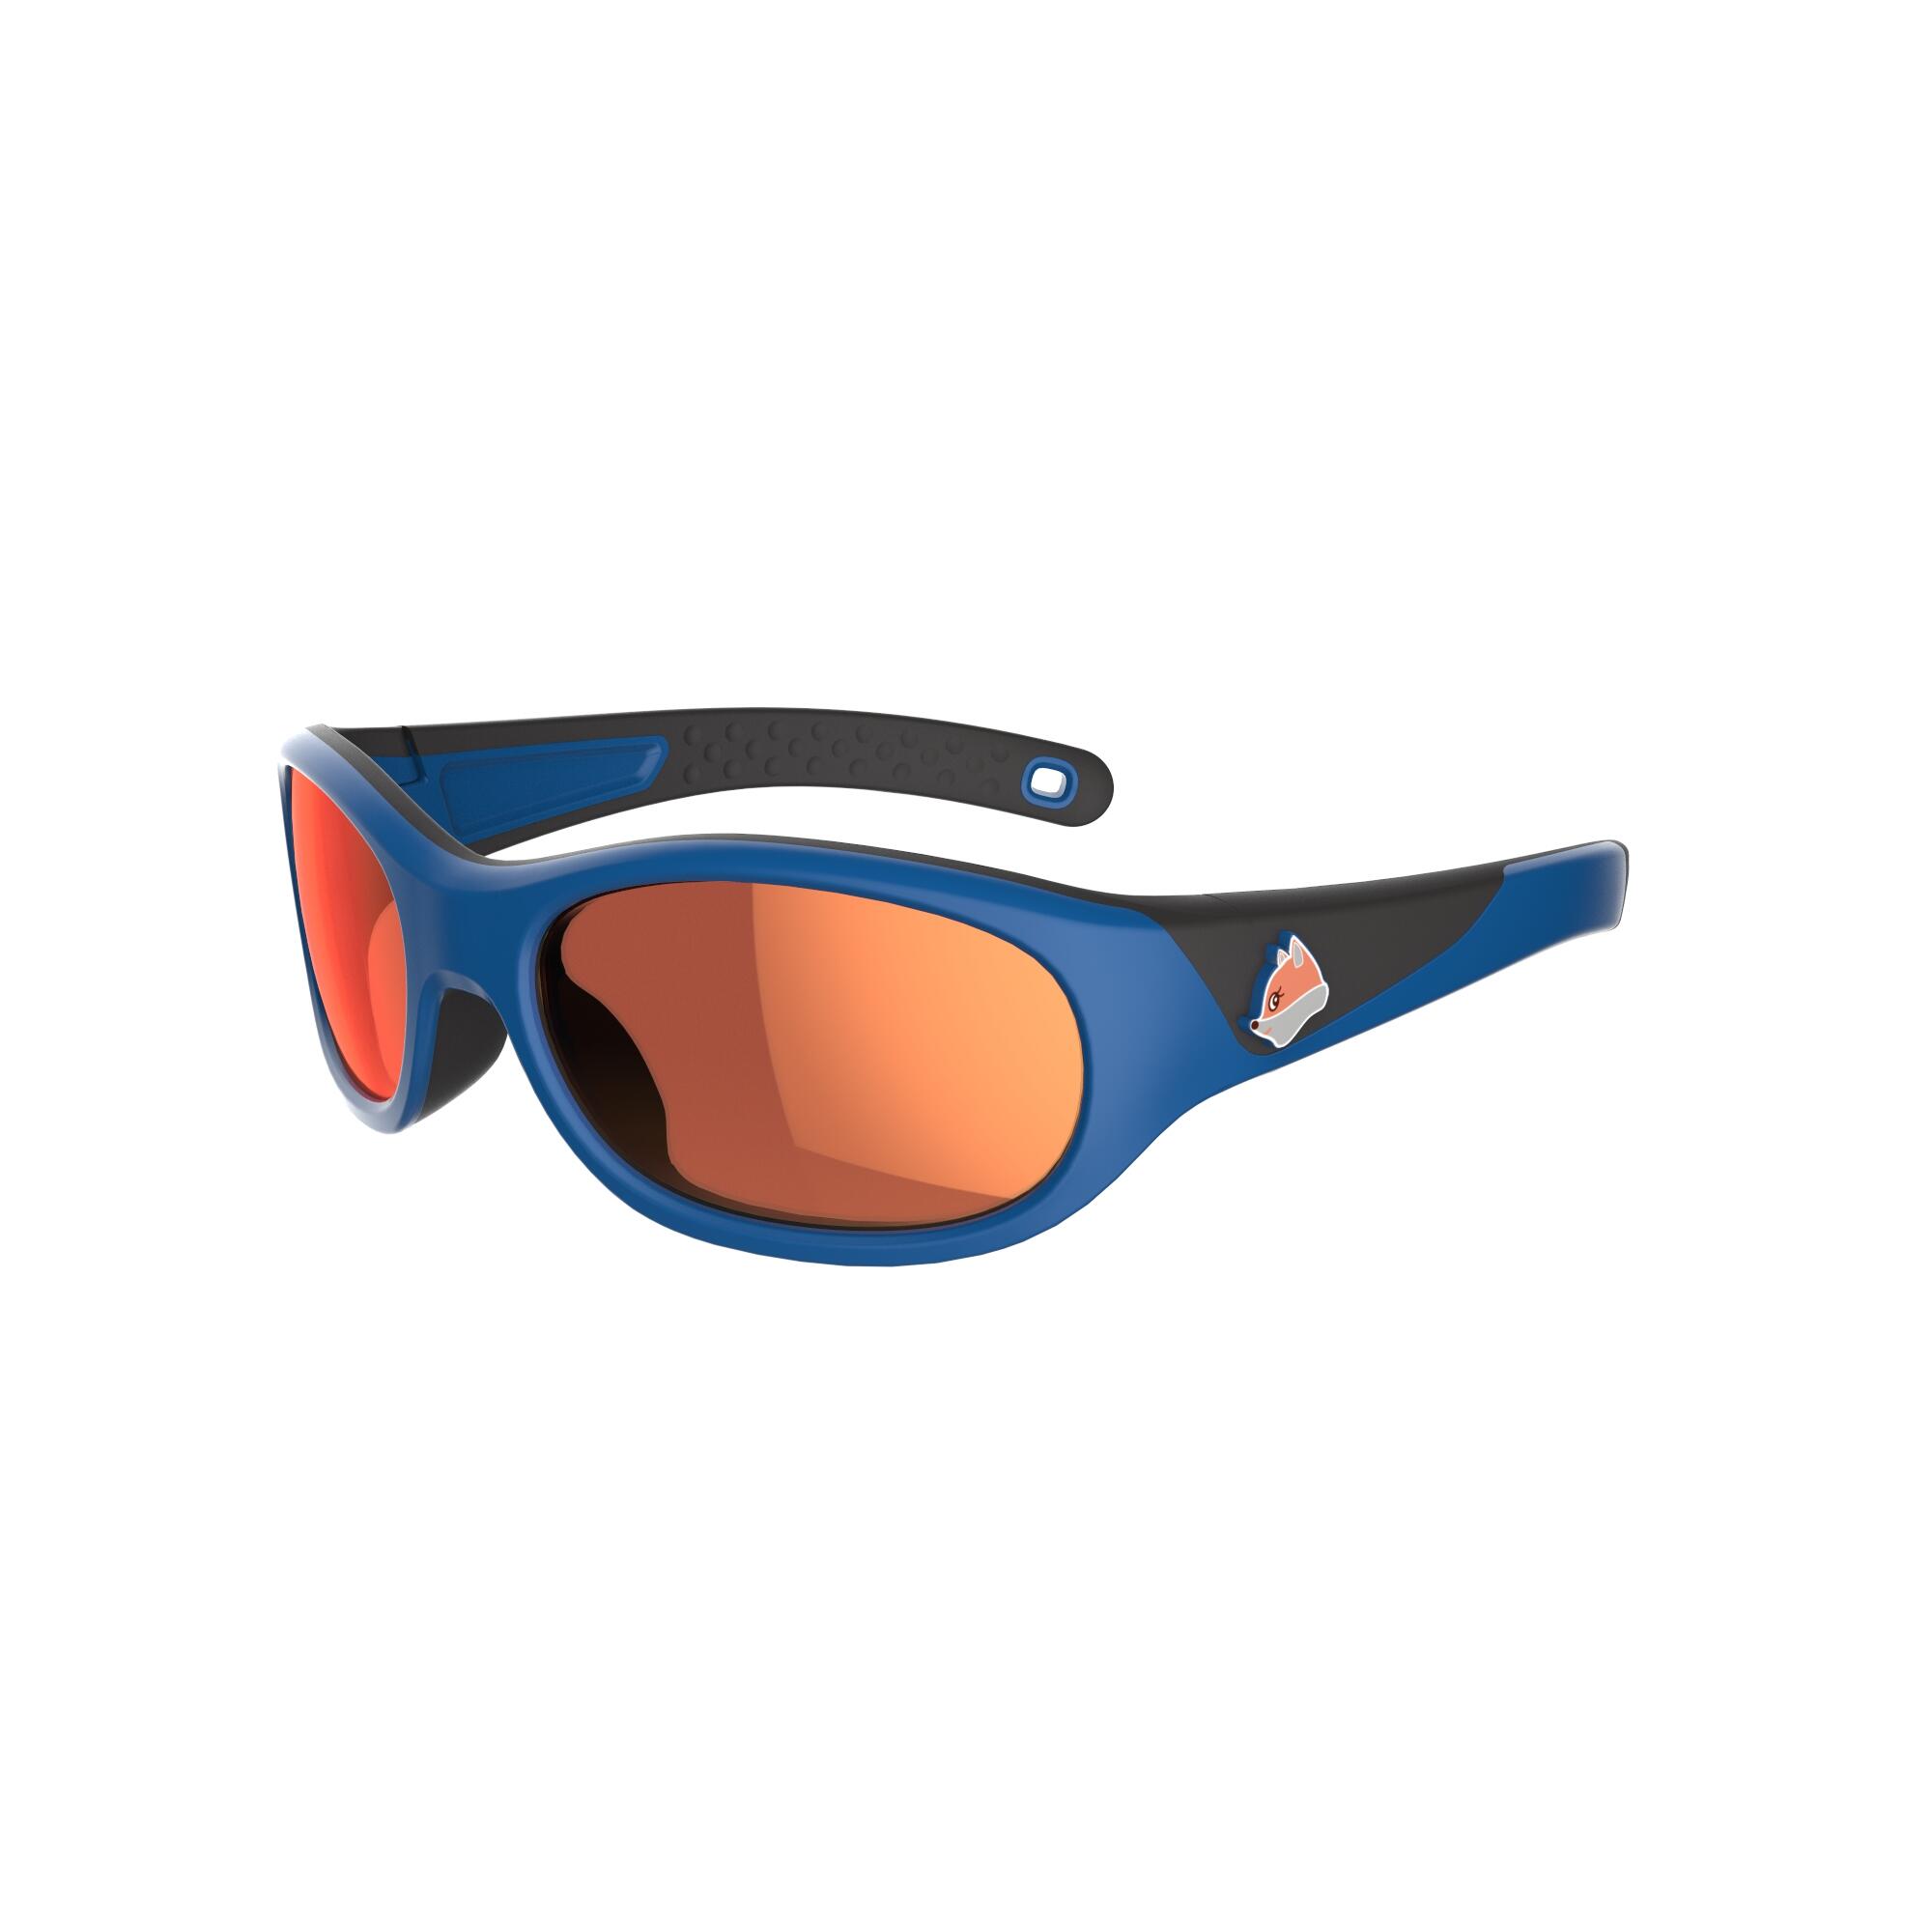 QUECHUA Children's Category 4 Hiking Sunglasses, Ages 5-6 MH K140 - Blue/Orange